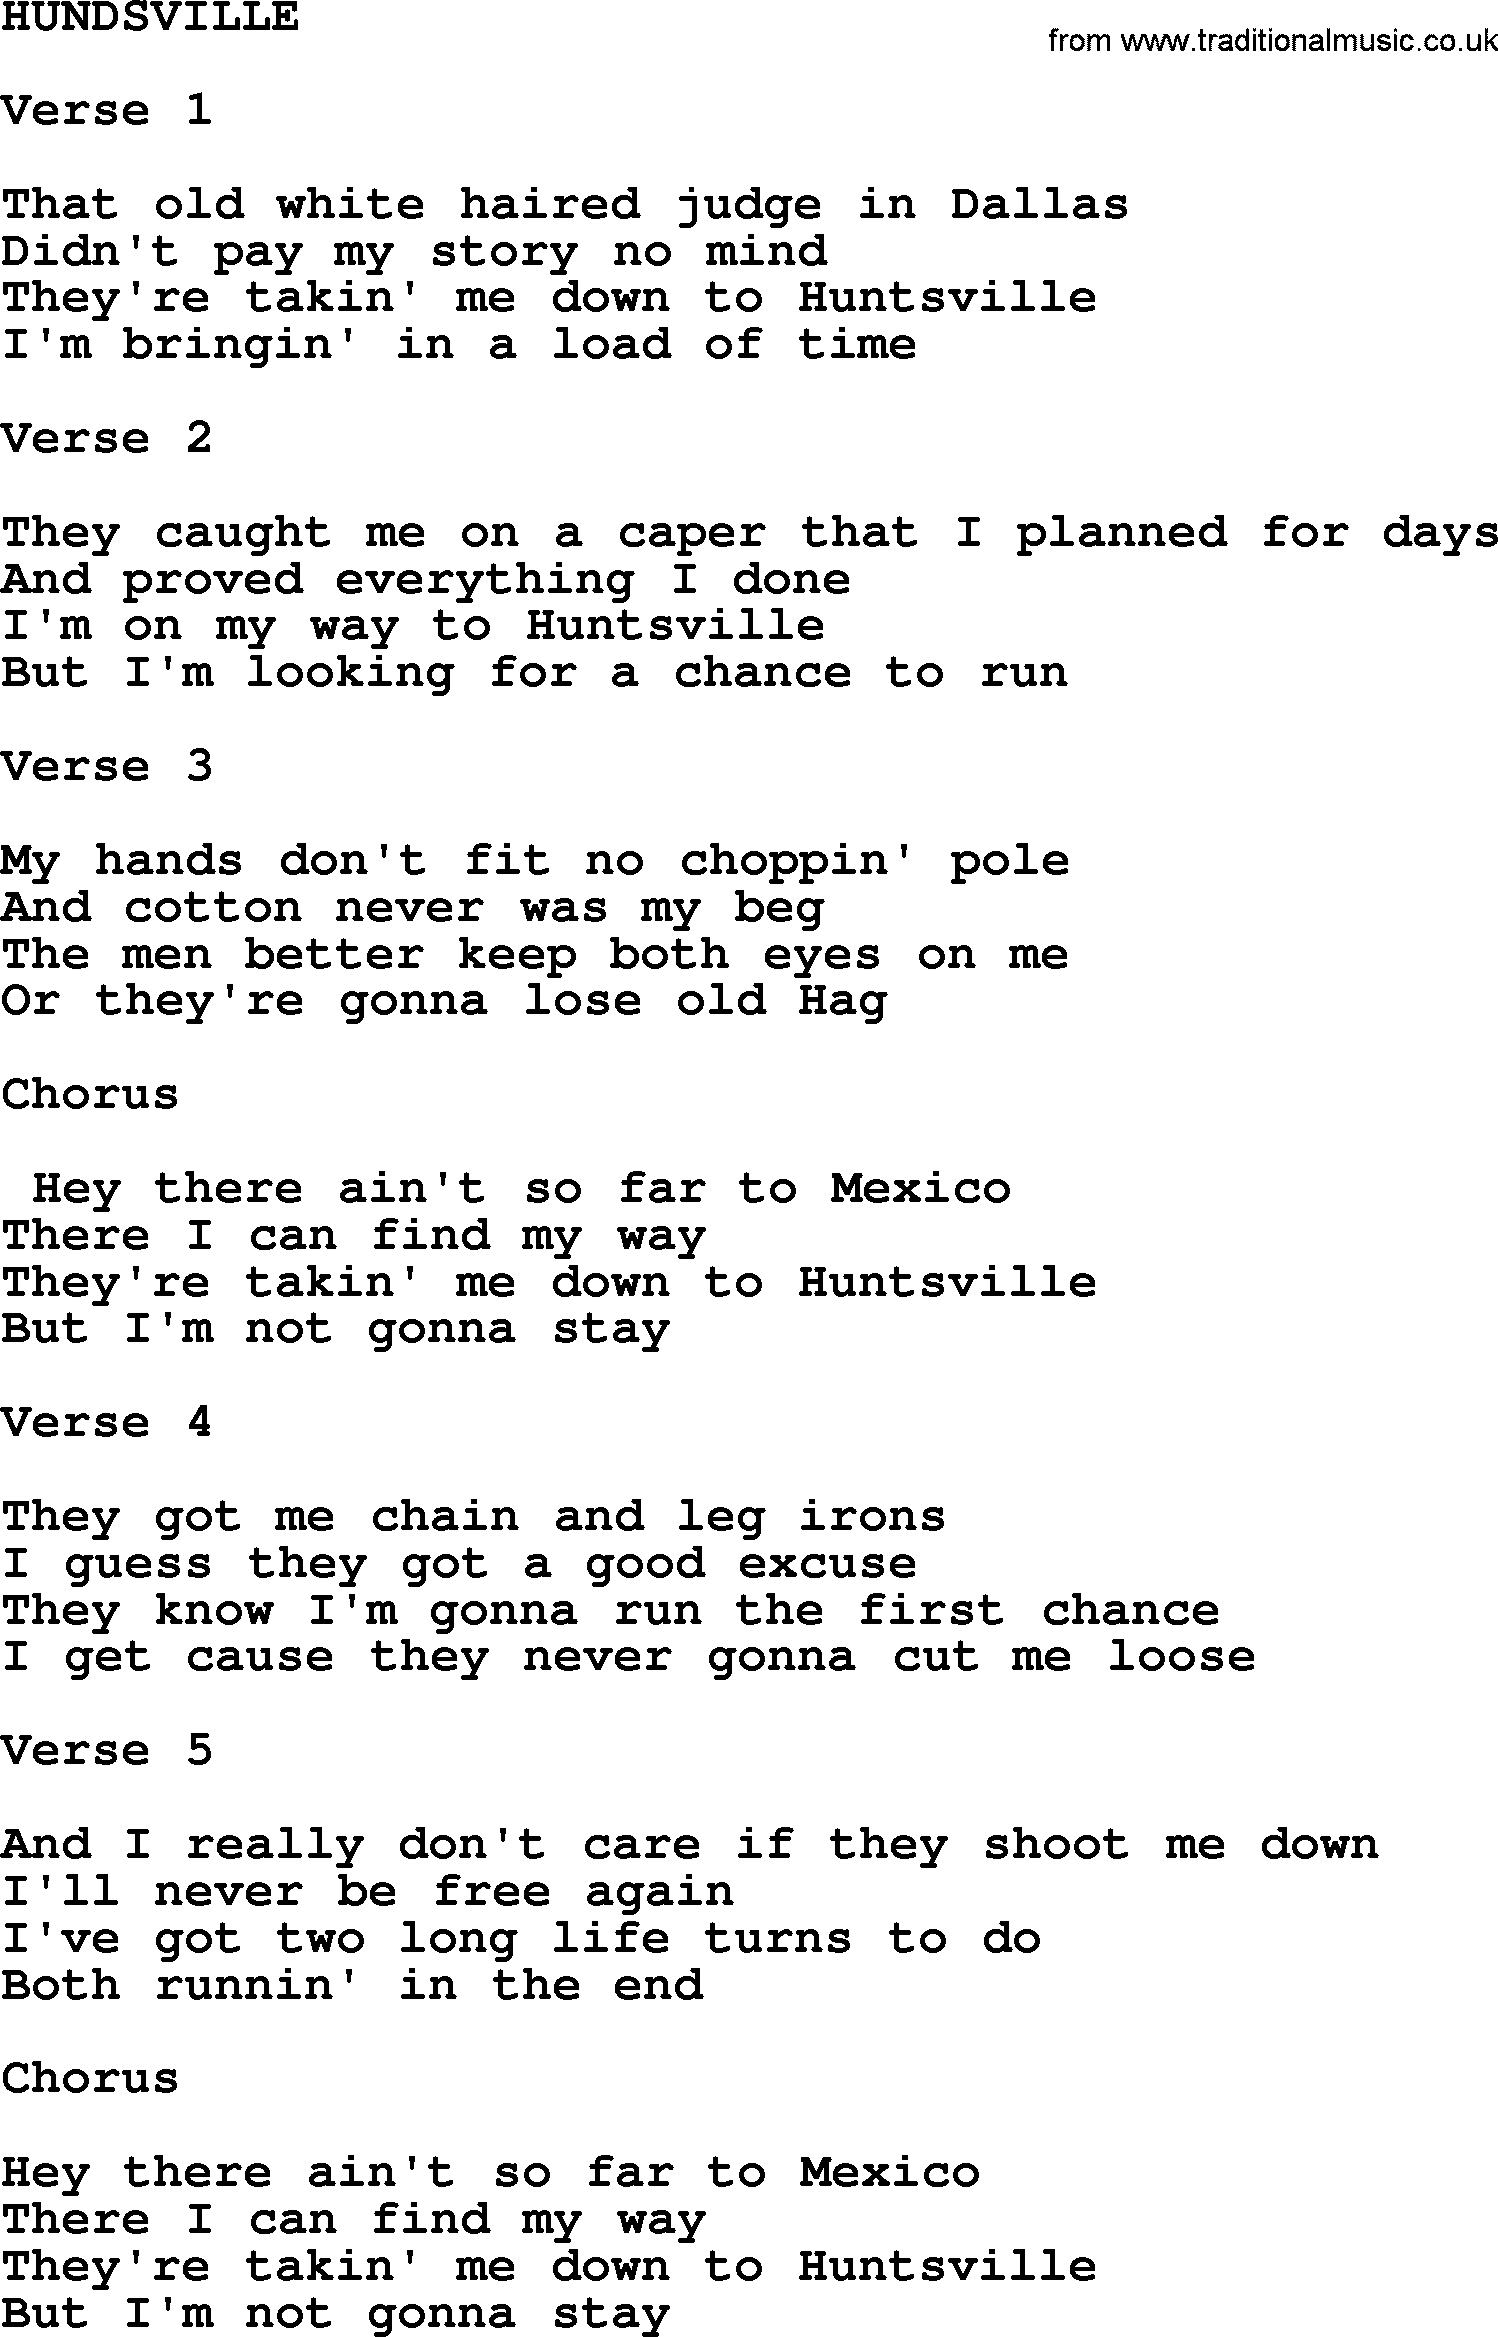 Merle Haggard song: Hundsville, lyrics.